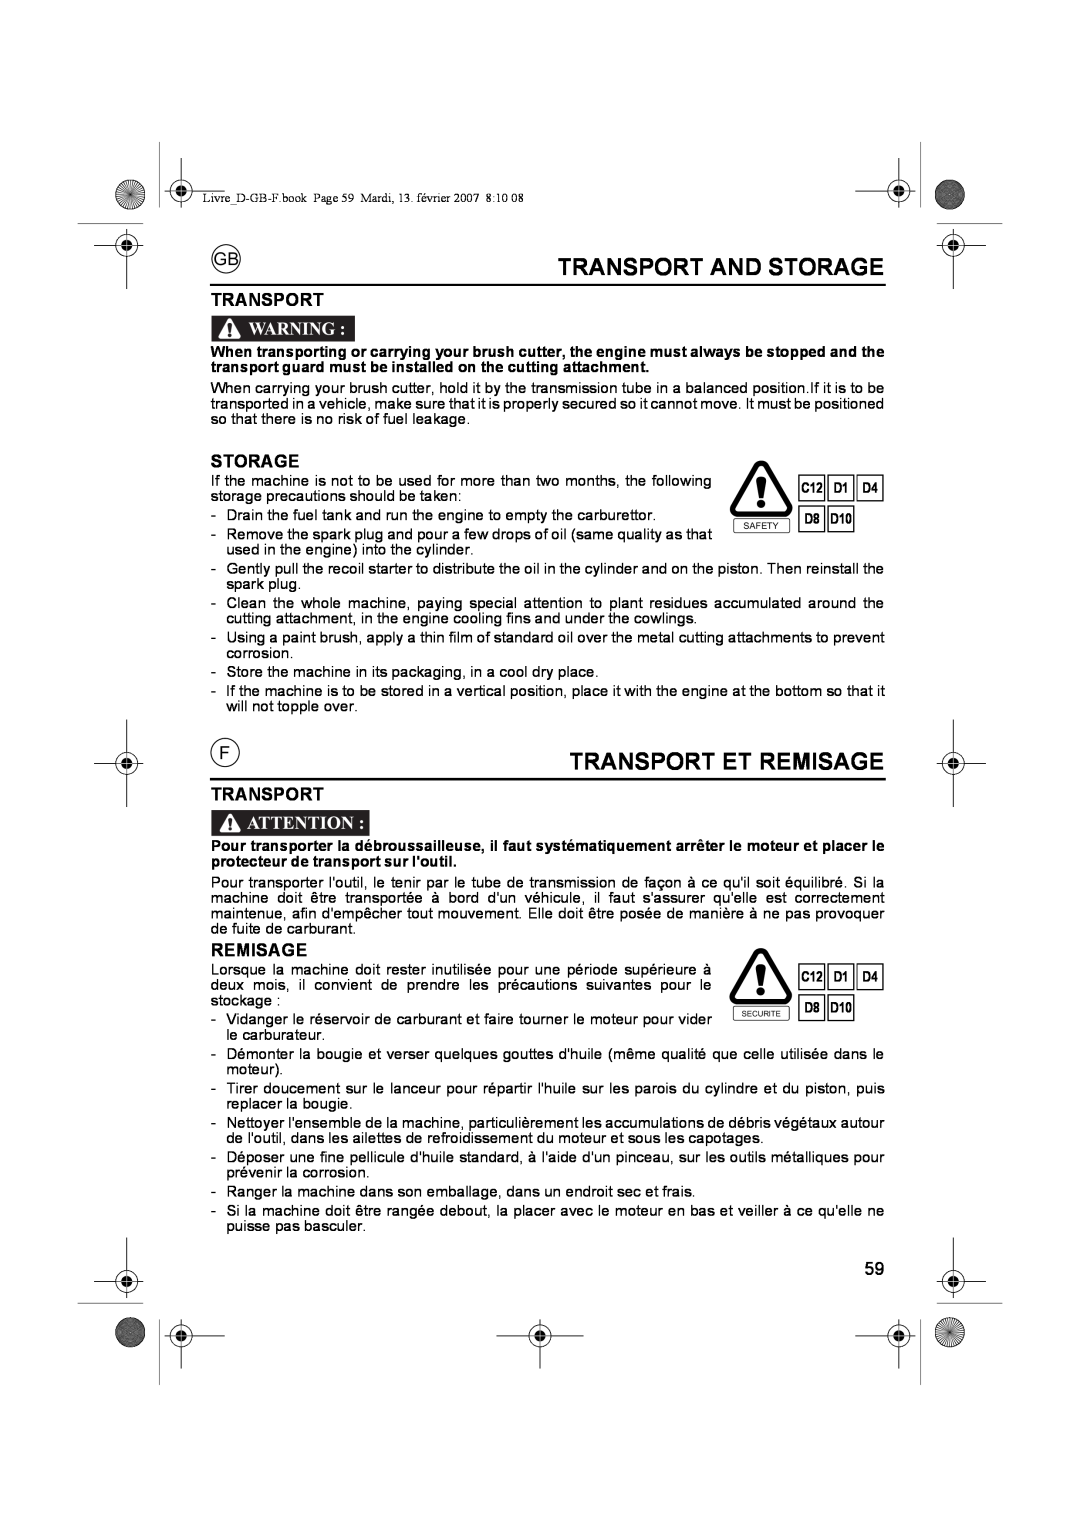 Honda Power Equipment UMK435E owner manual Transport And Storage, Transport Et Remisage, C12 D1 D4 D8 D10 